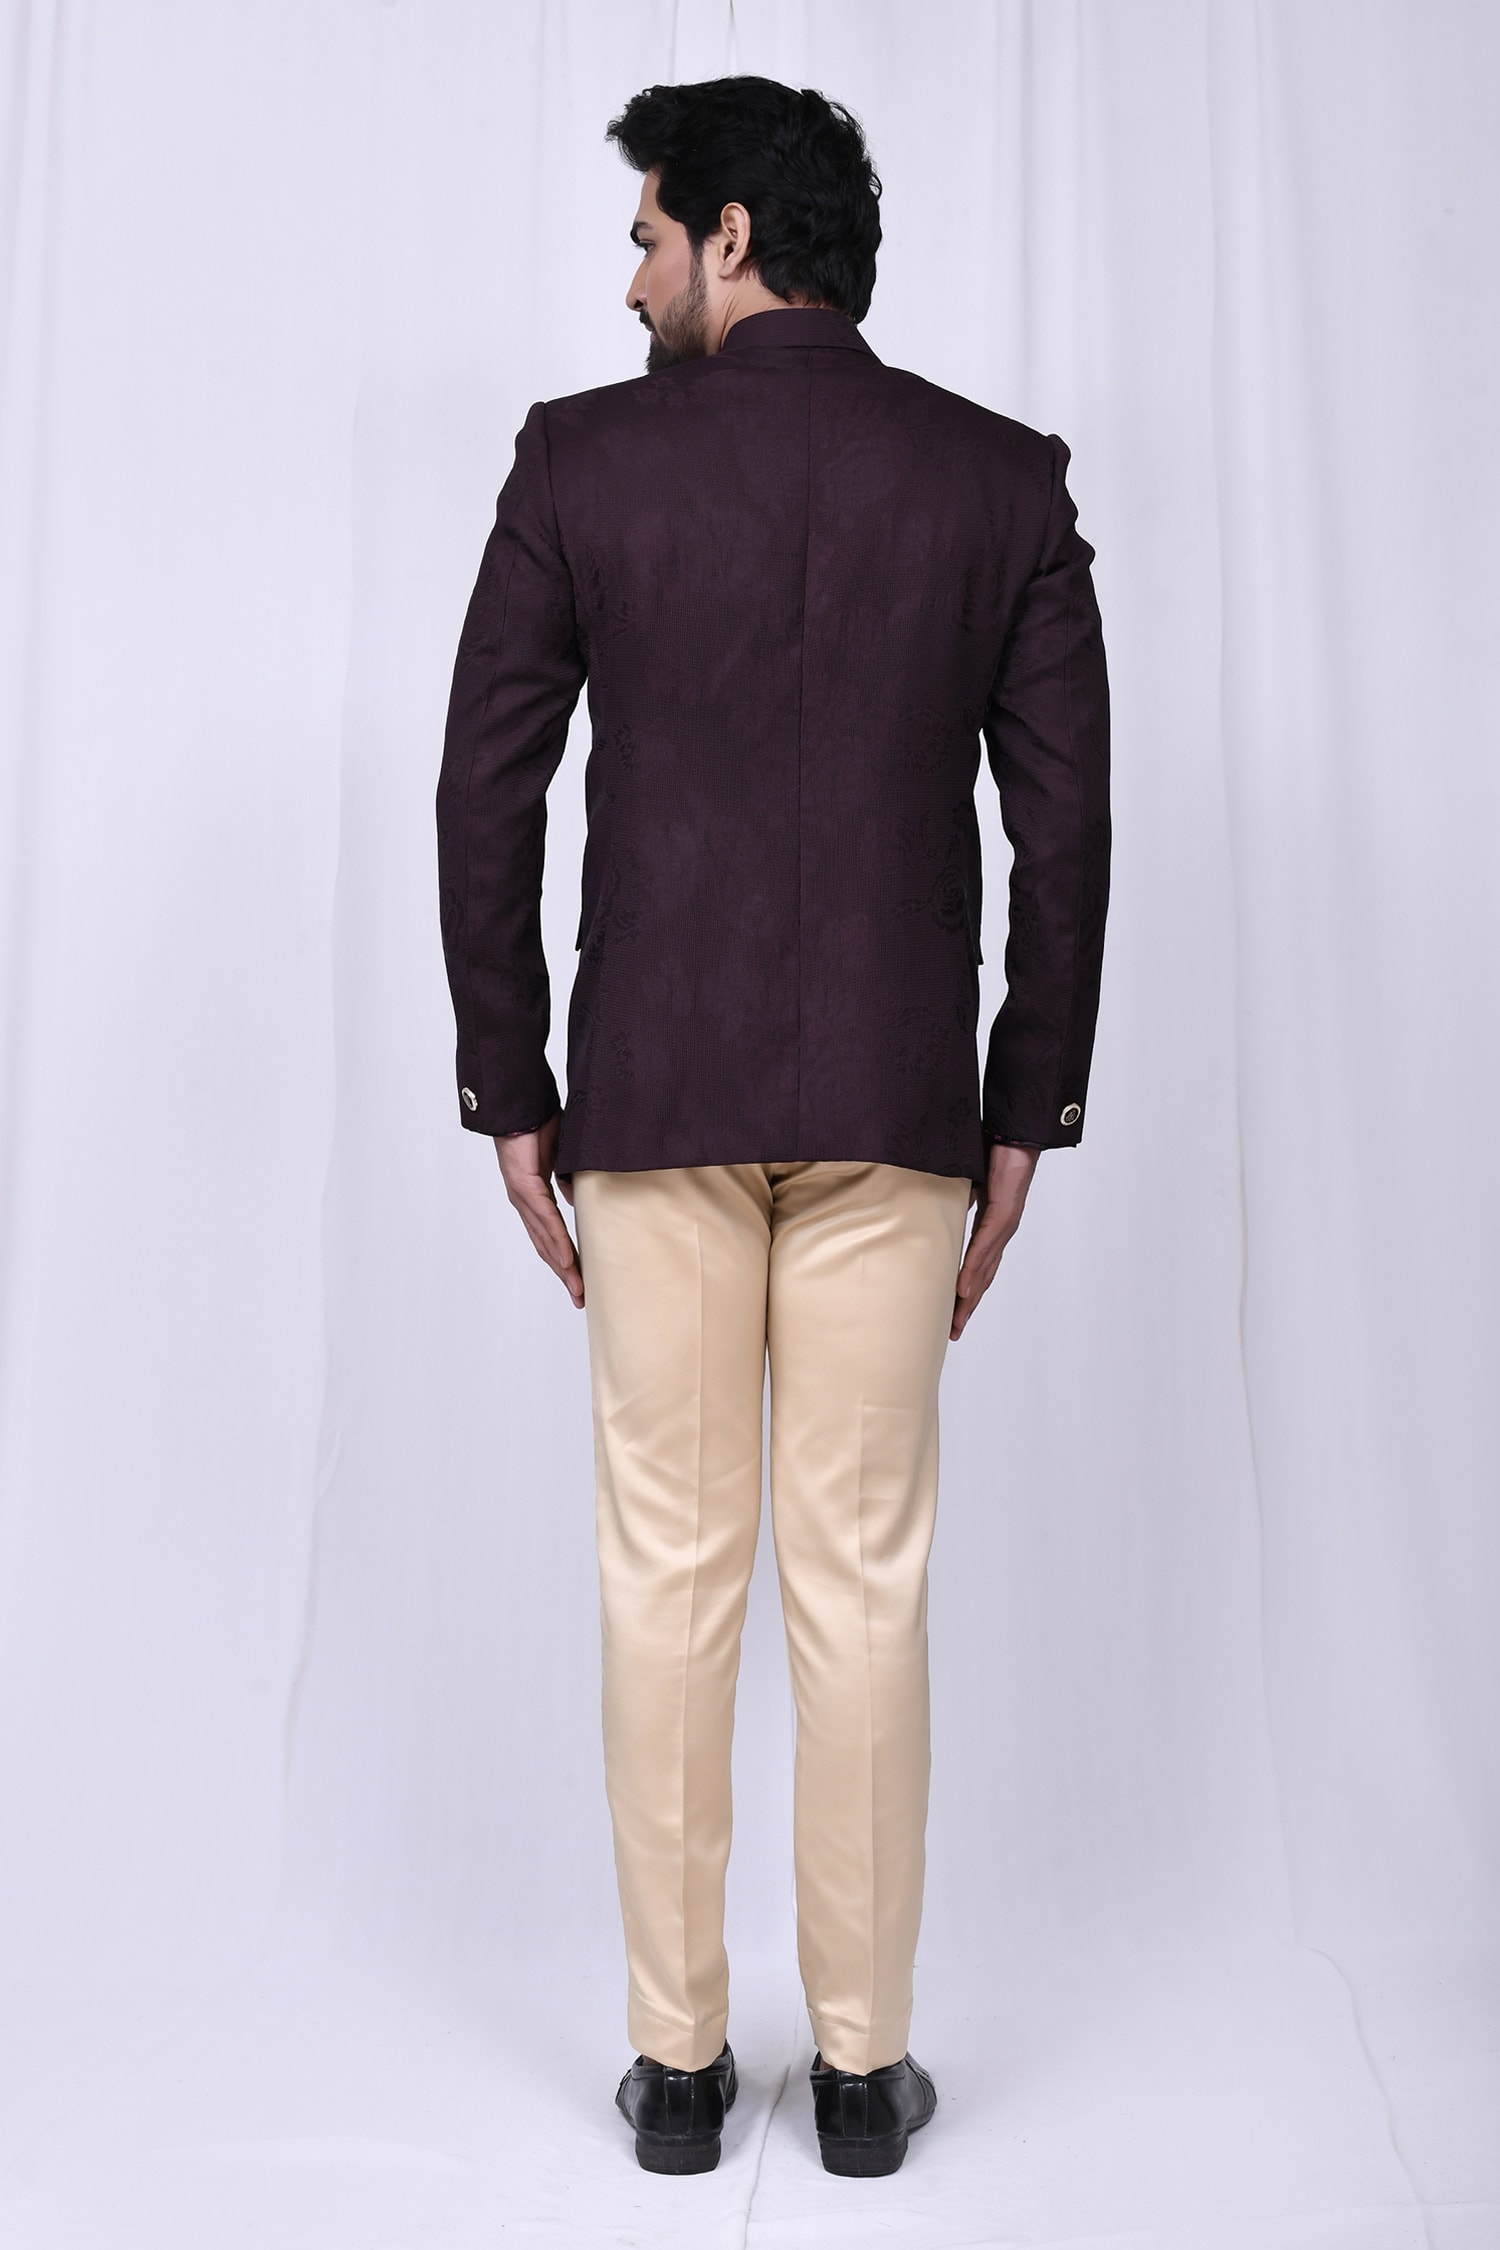 Hemsworth Burgundy Suit